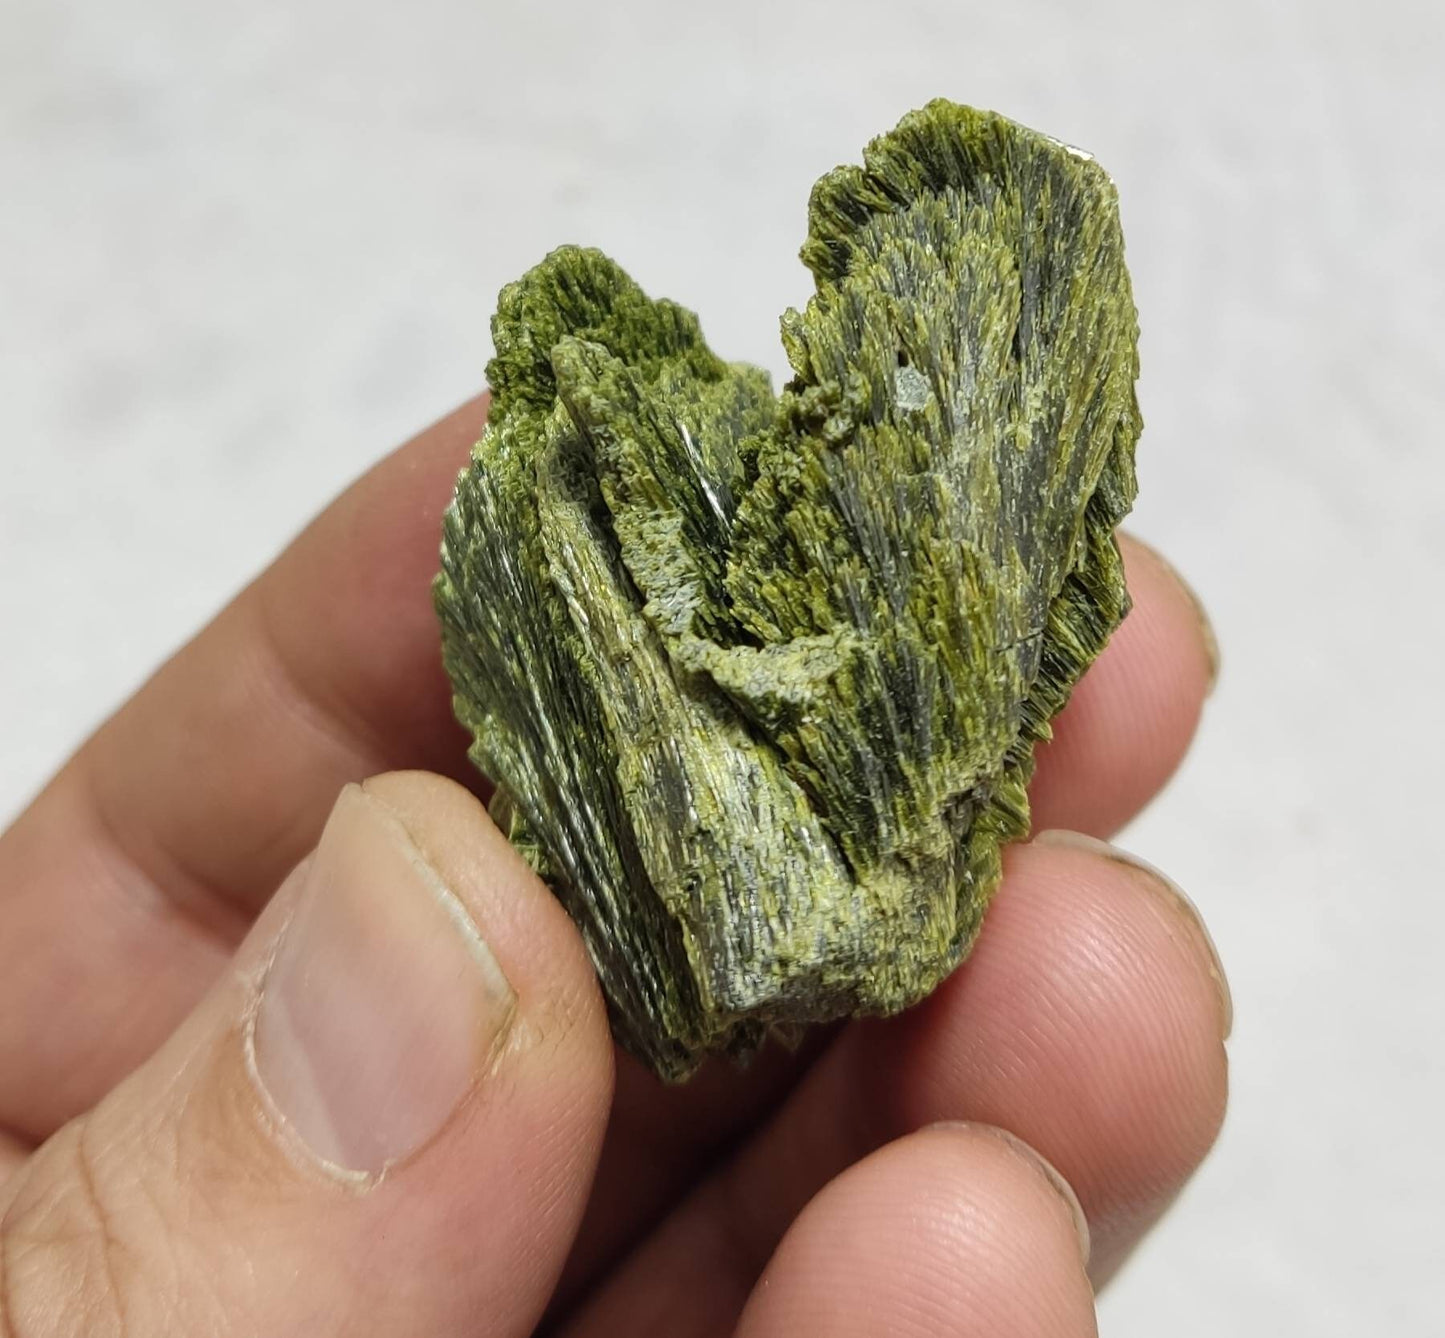 Crystal specimen of Epidote 41 grams